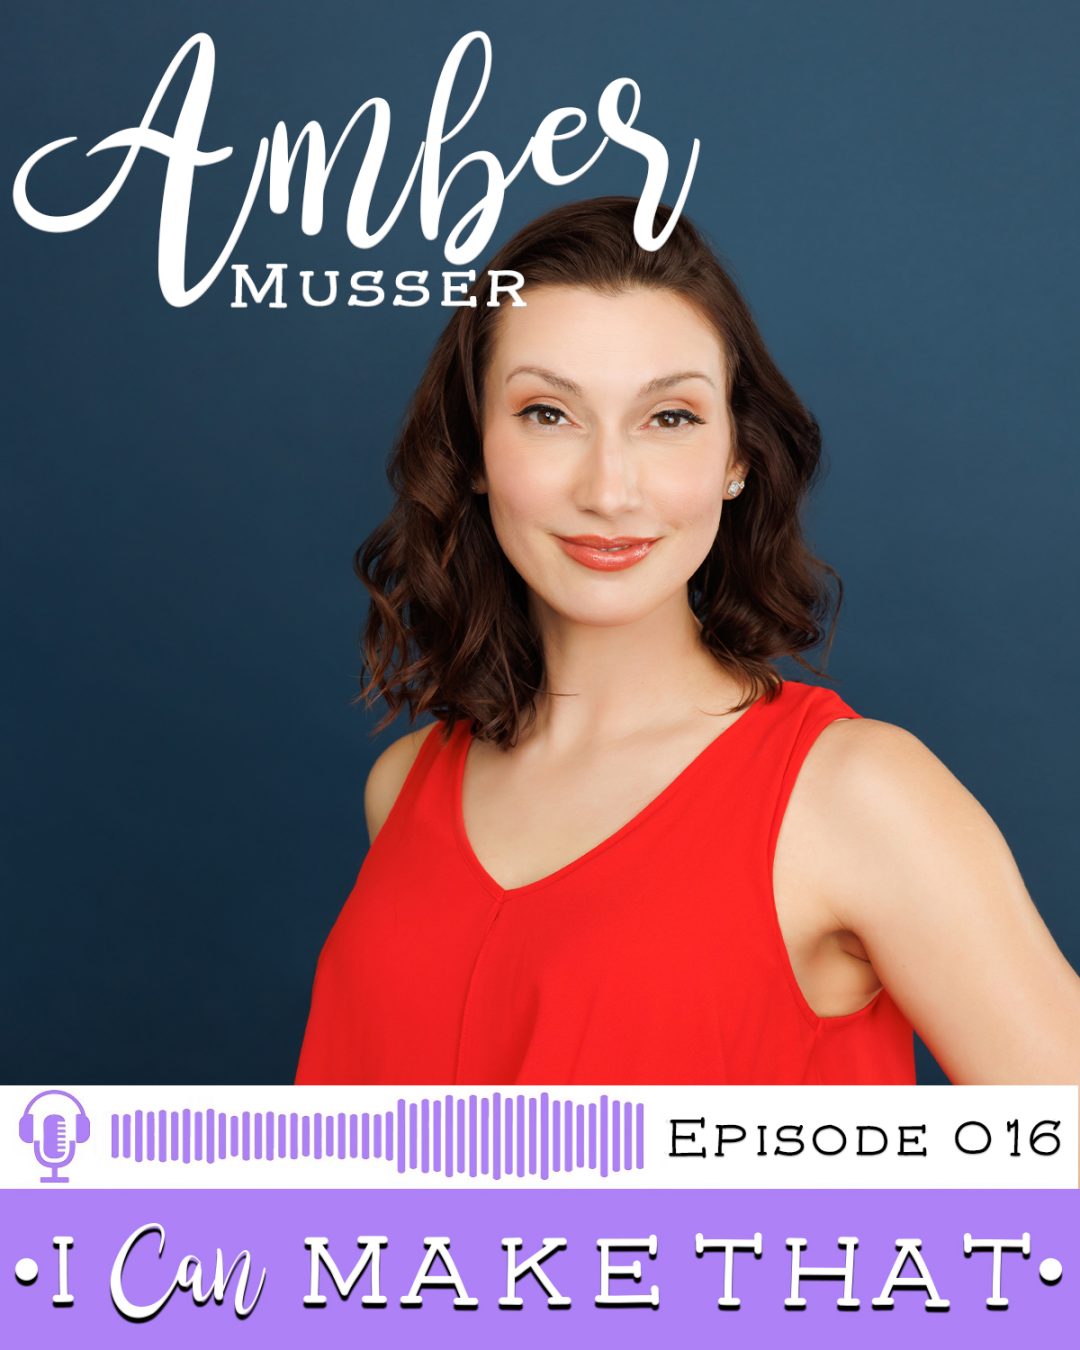 I Can Make That Podcast | Episode 016 :: Amber Musser, Bluebird Media